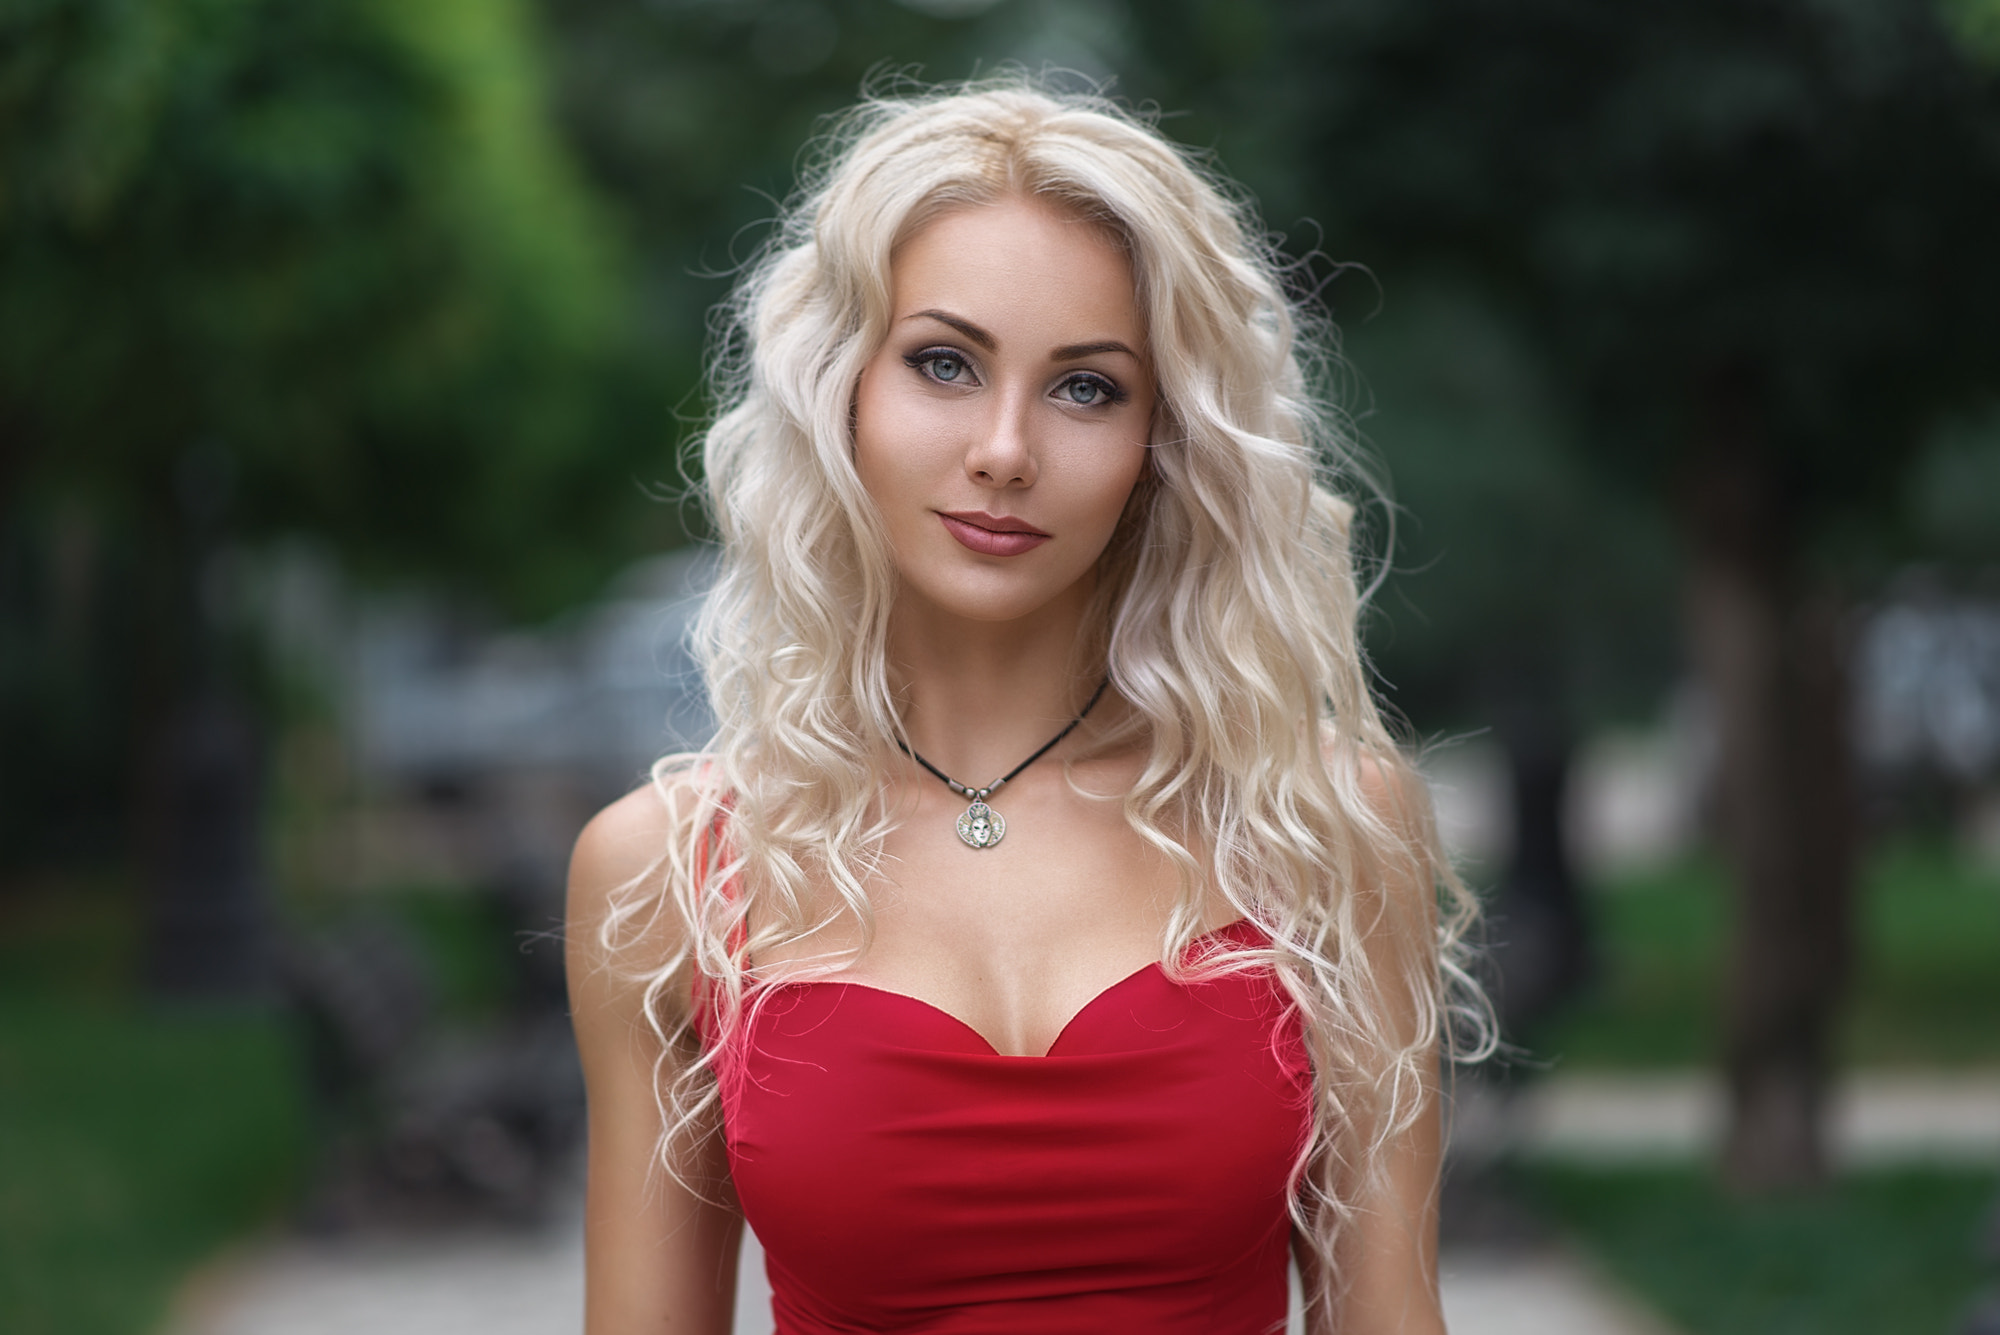 People 2000x1335 women blonde red dress tight dress portrait necklace trees women outdoors wavy hair Galyaev Evgeniy Anna Khachaturova